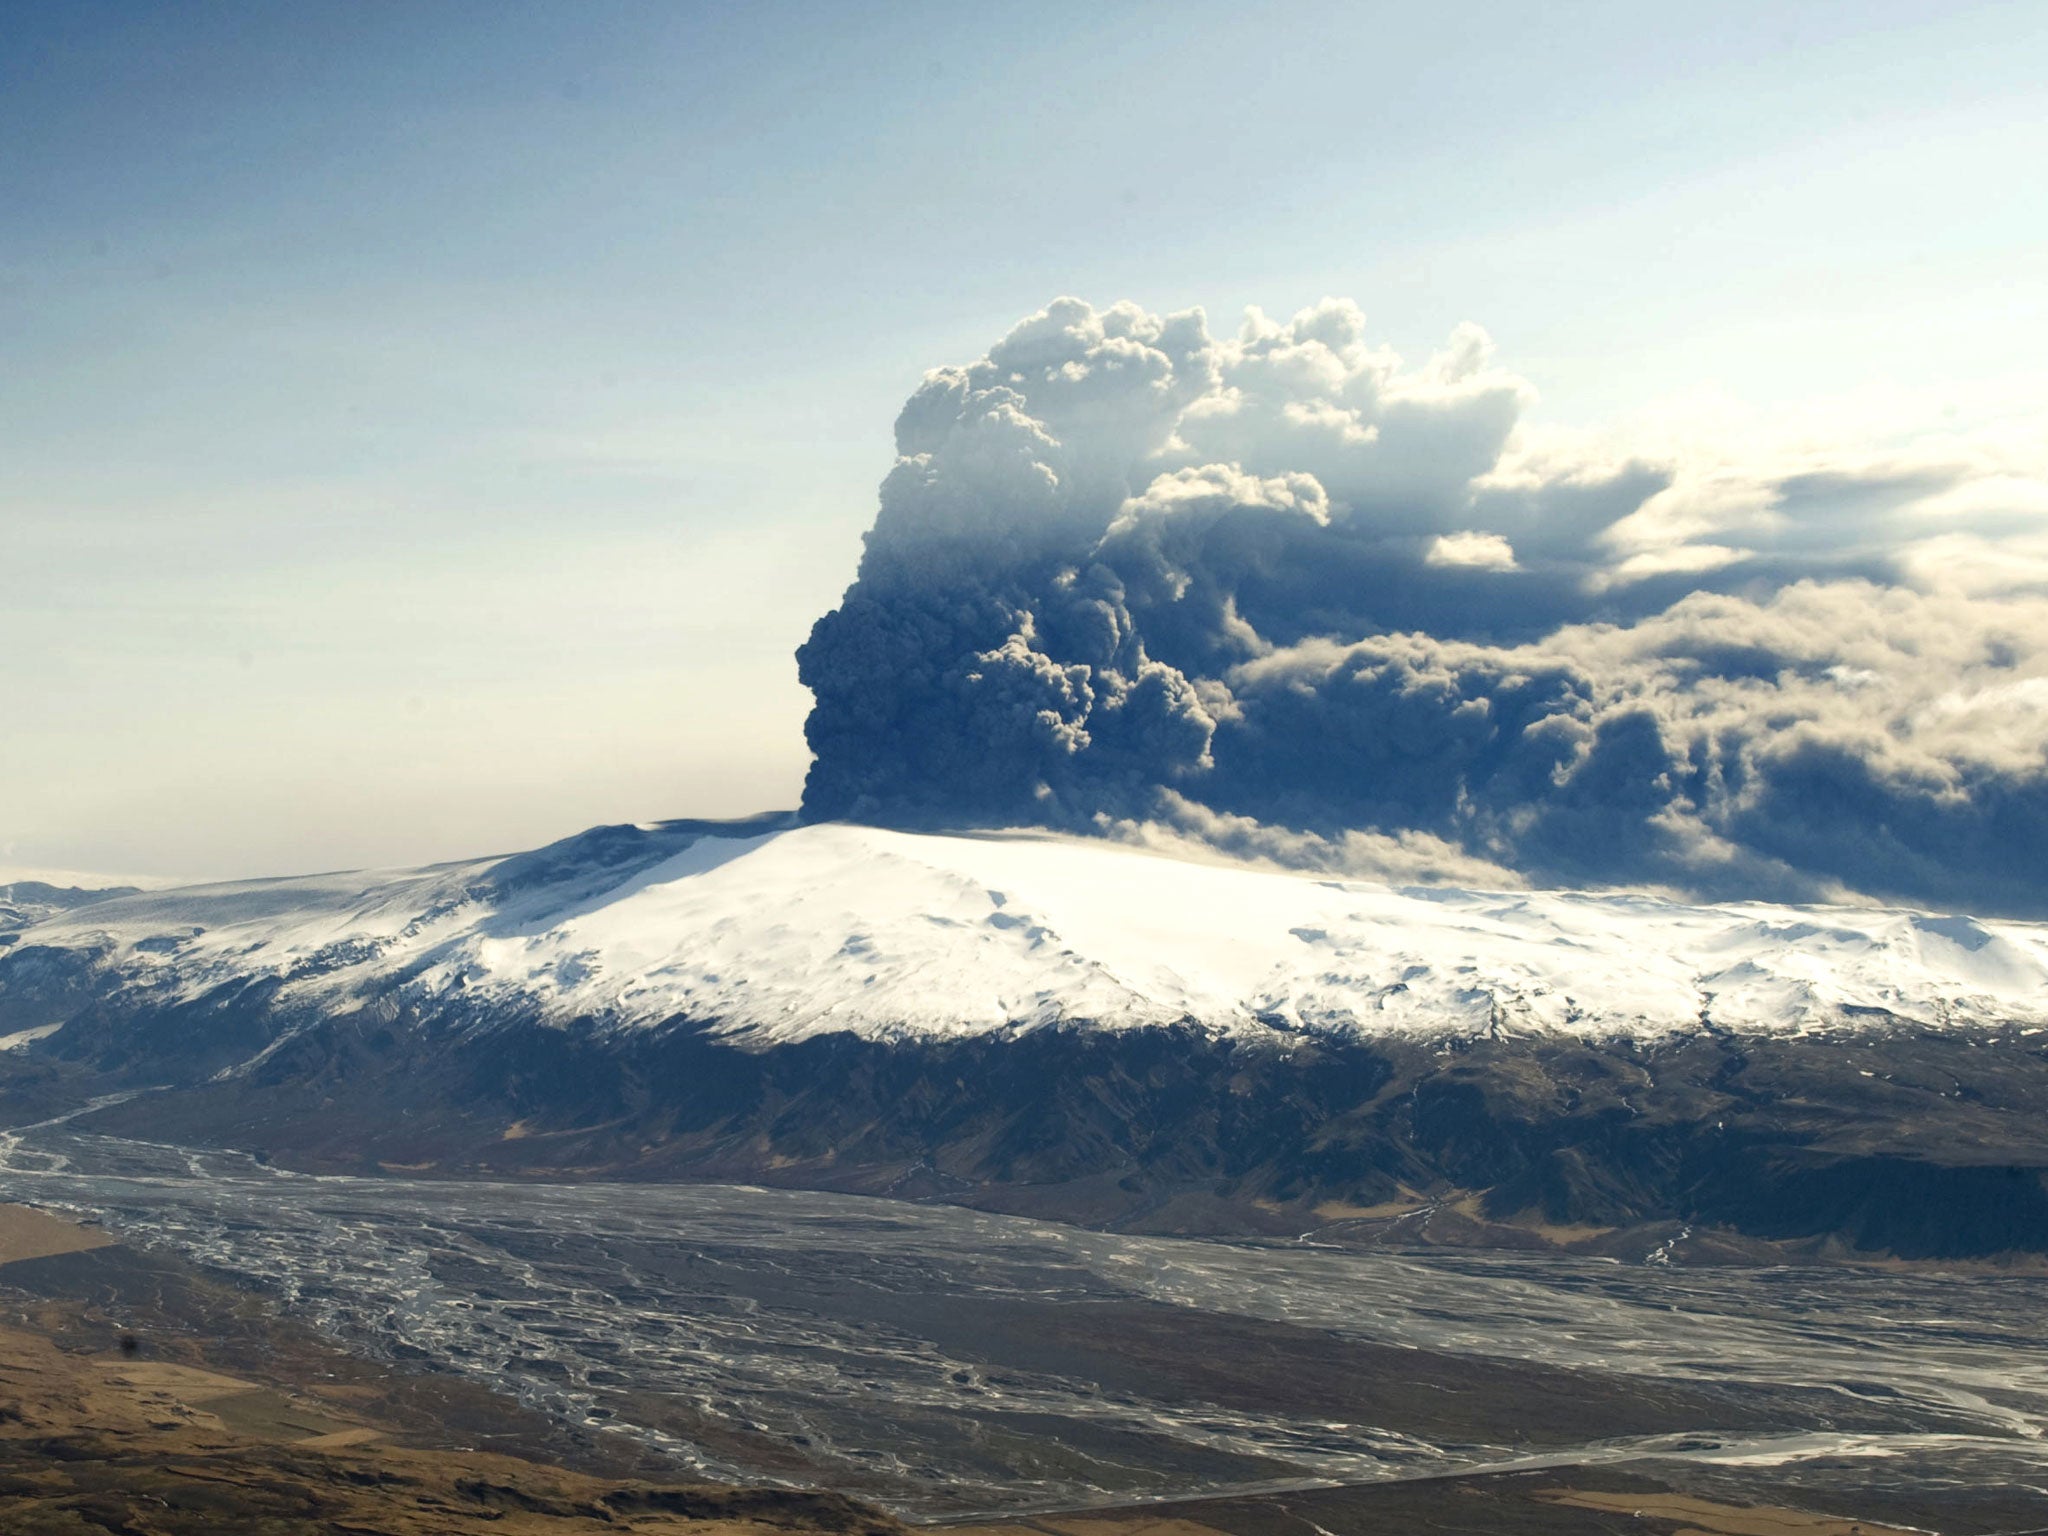 Iceland's Eyjafjallajokull volcano billowing smoke and ash in April 2010